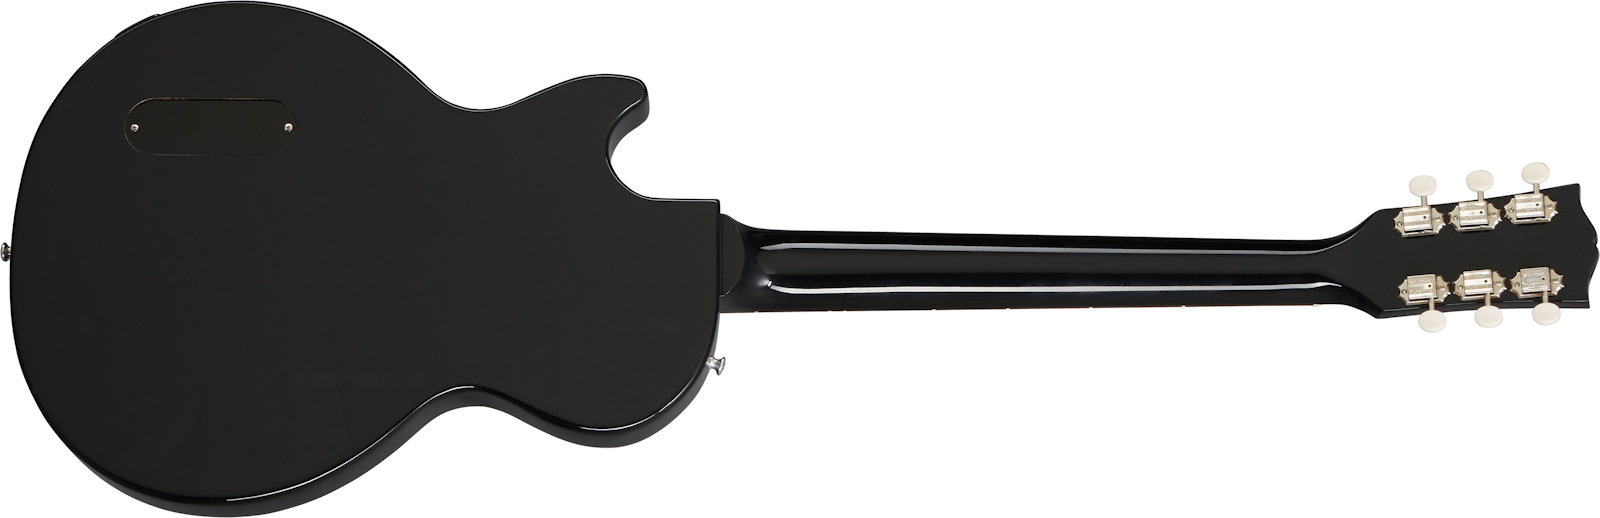 Gibson Les Paul Junior Original 2020 P90 Ht Rw - Ebony - Enkel gesneden elektrische gitaar - Variation 1